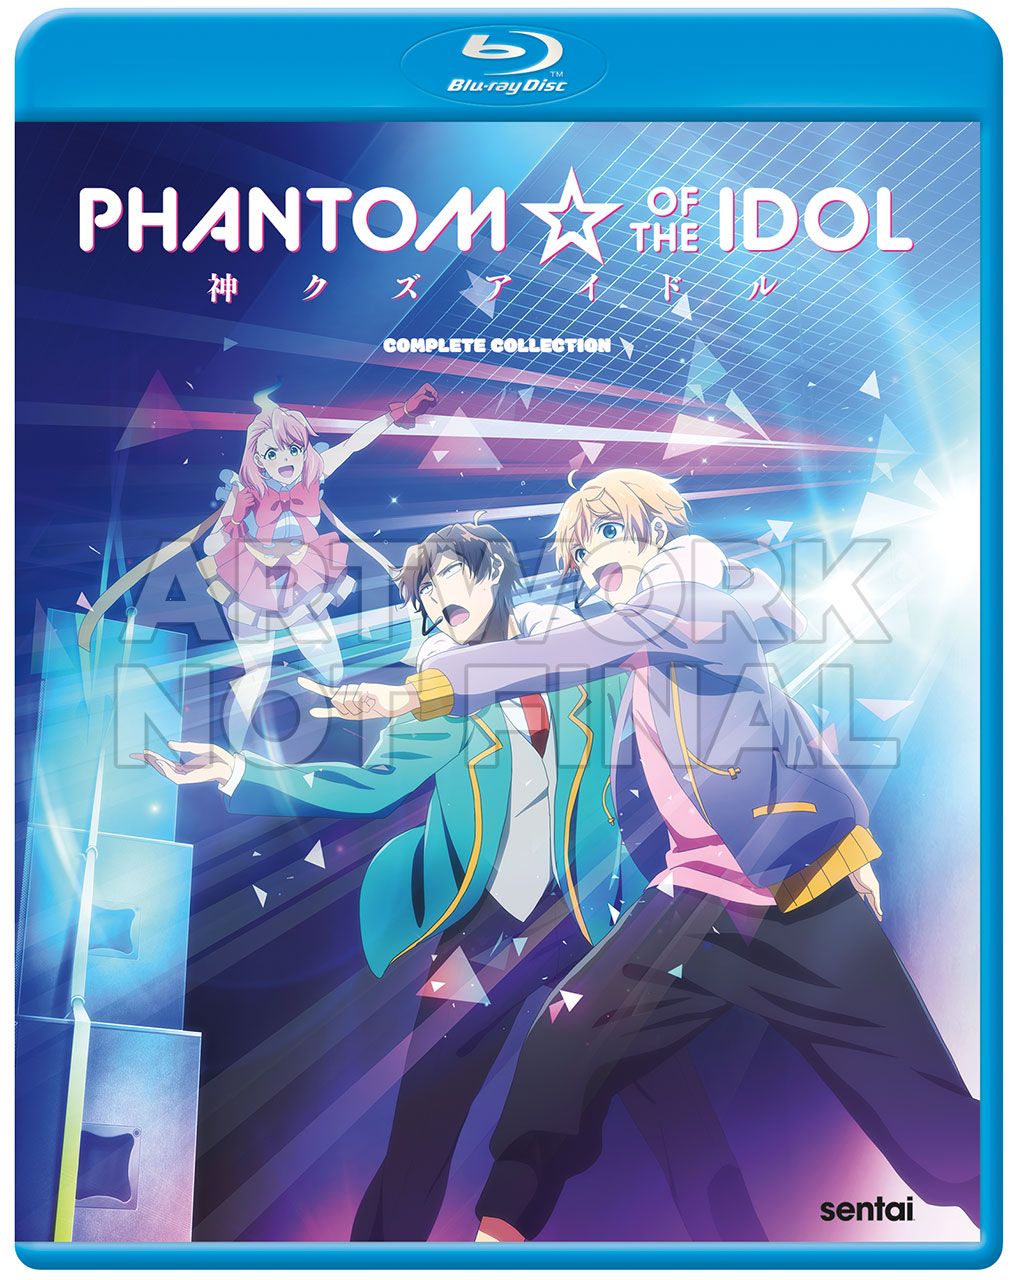 Phantom of the Idol. Blu-ray cover art provided by Sentai.